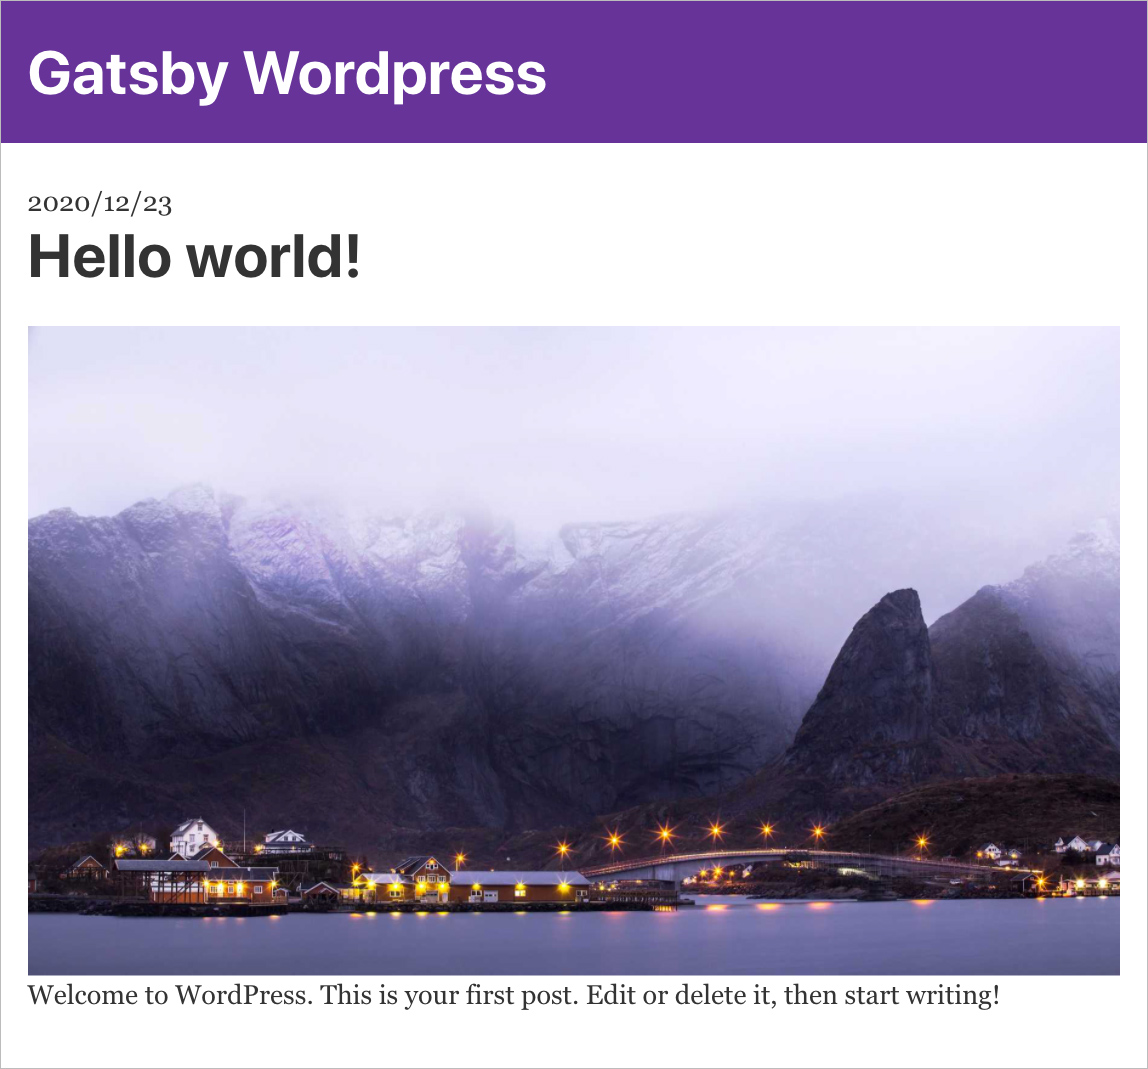 gatsby-wordpress-blog-post